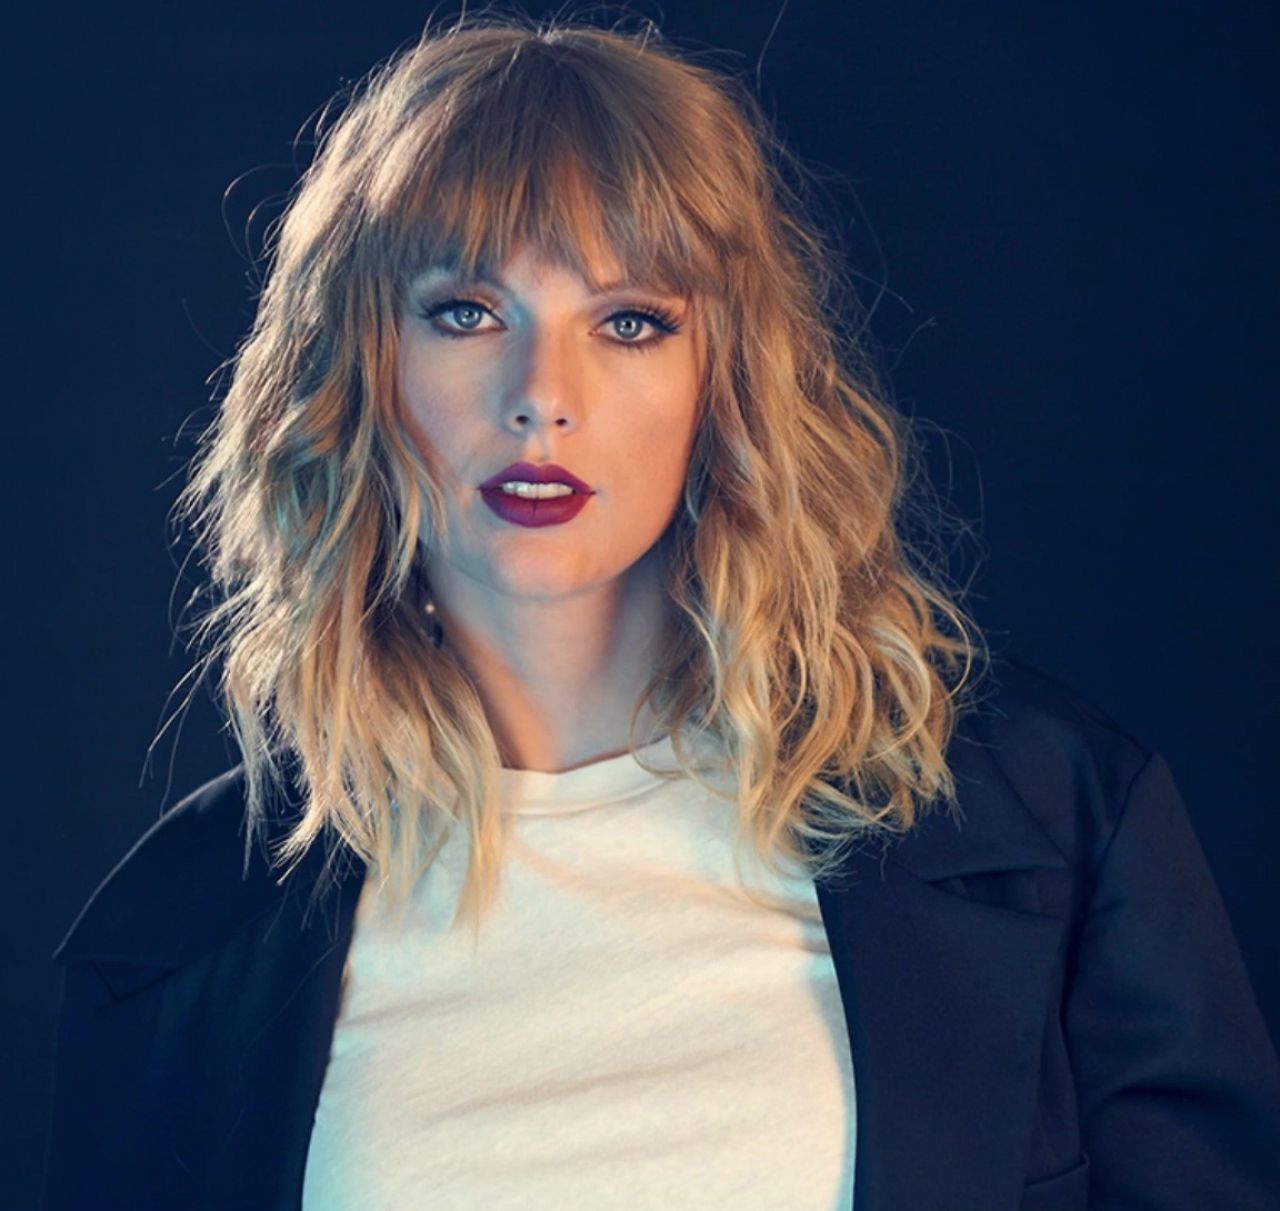 Taylor Swift - Headshot 2017